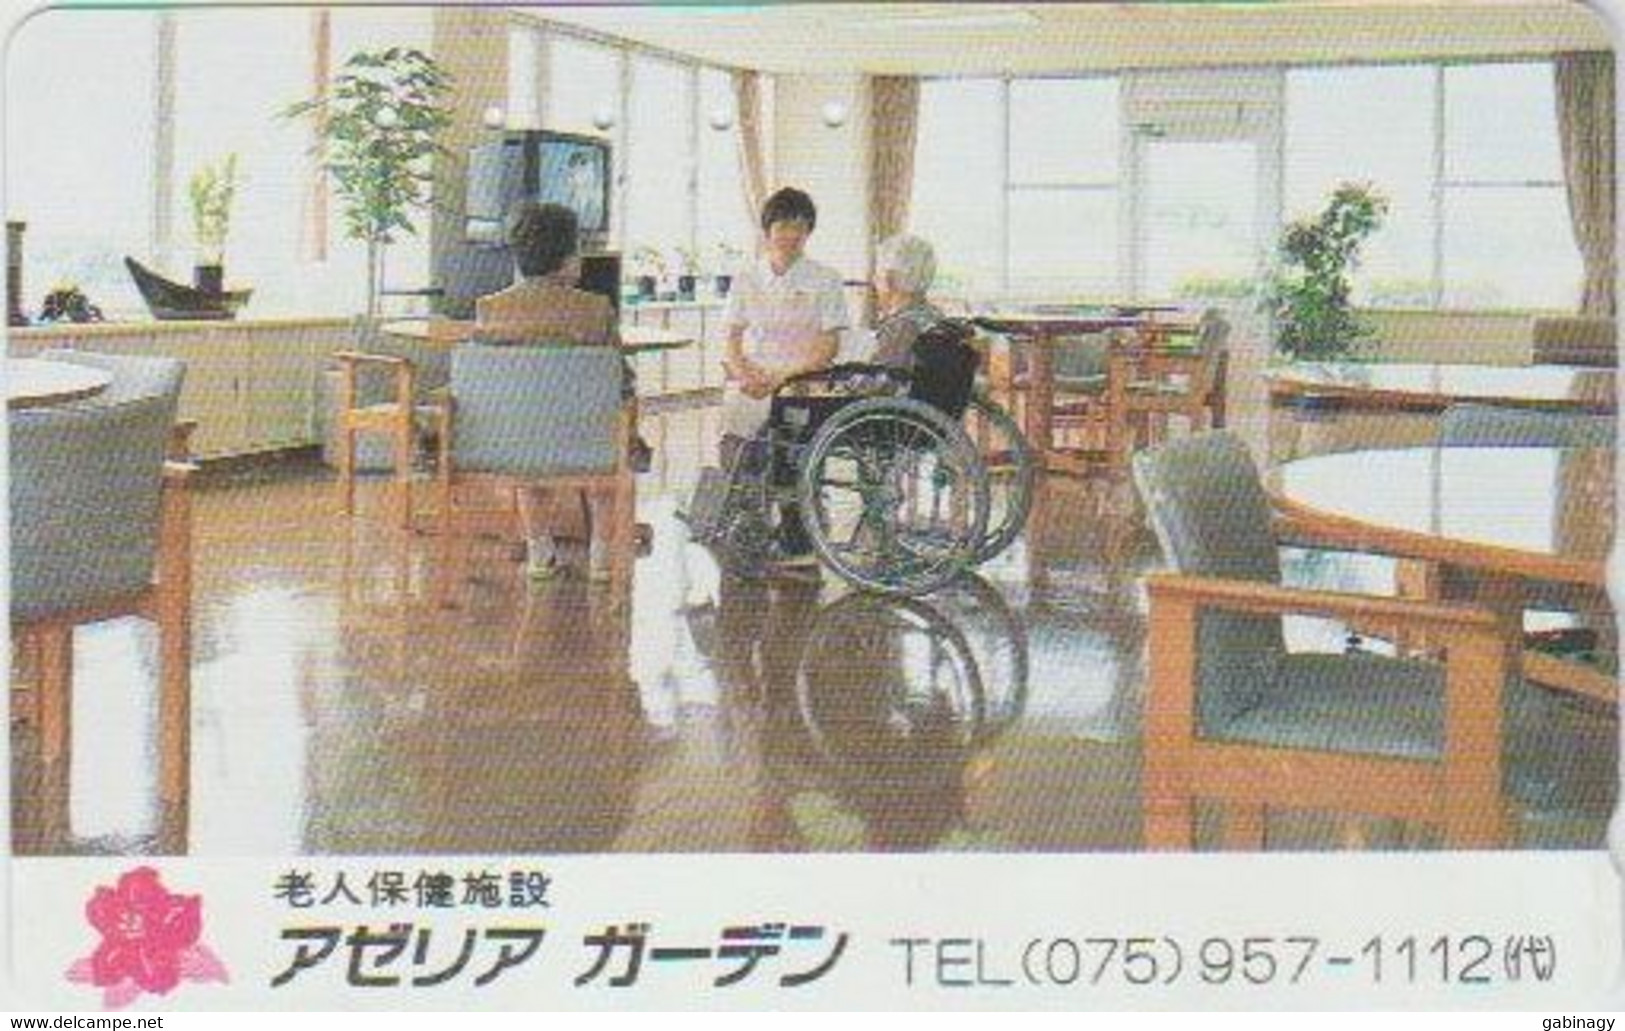 HEALTH - JAPAN-024 - 110-011 - Culture